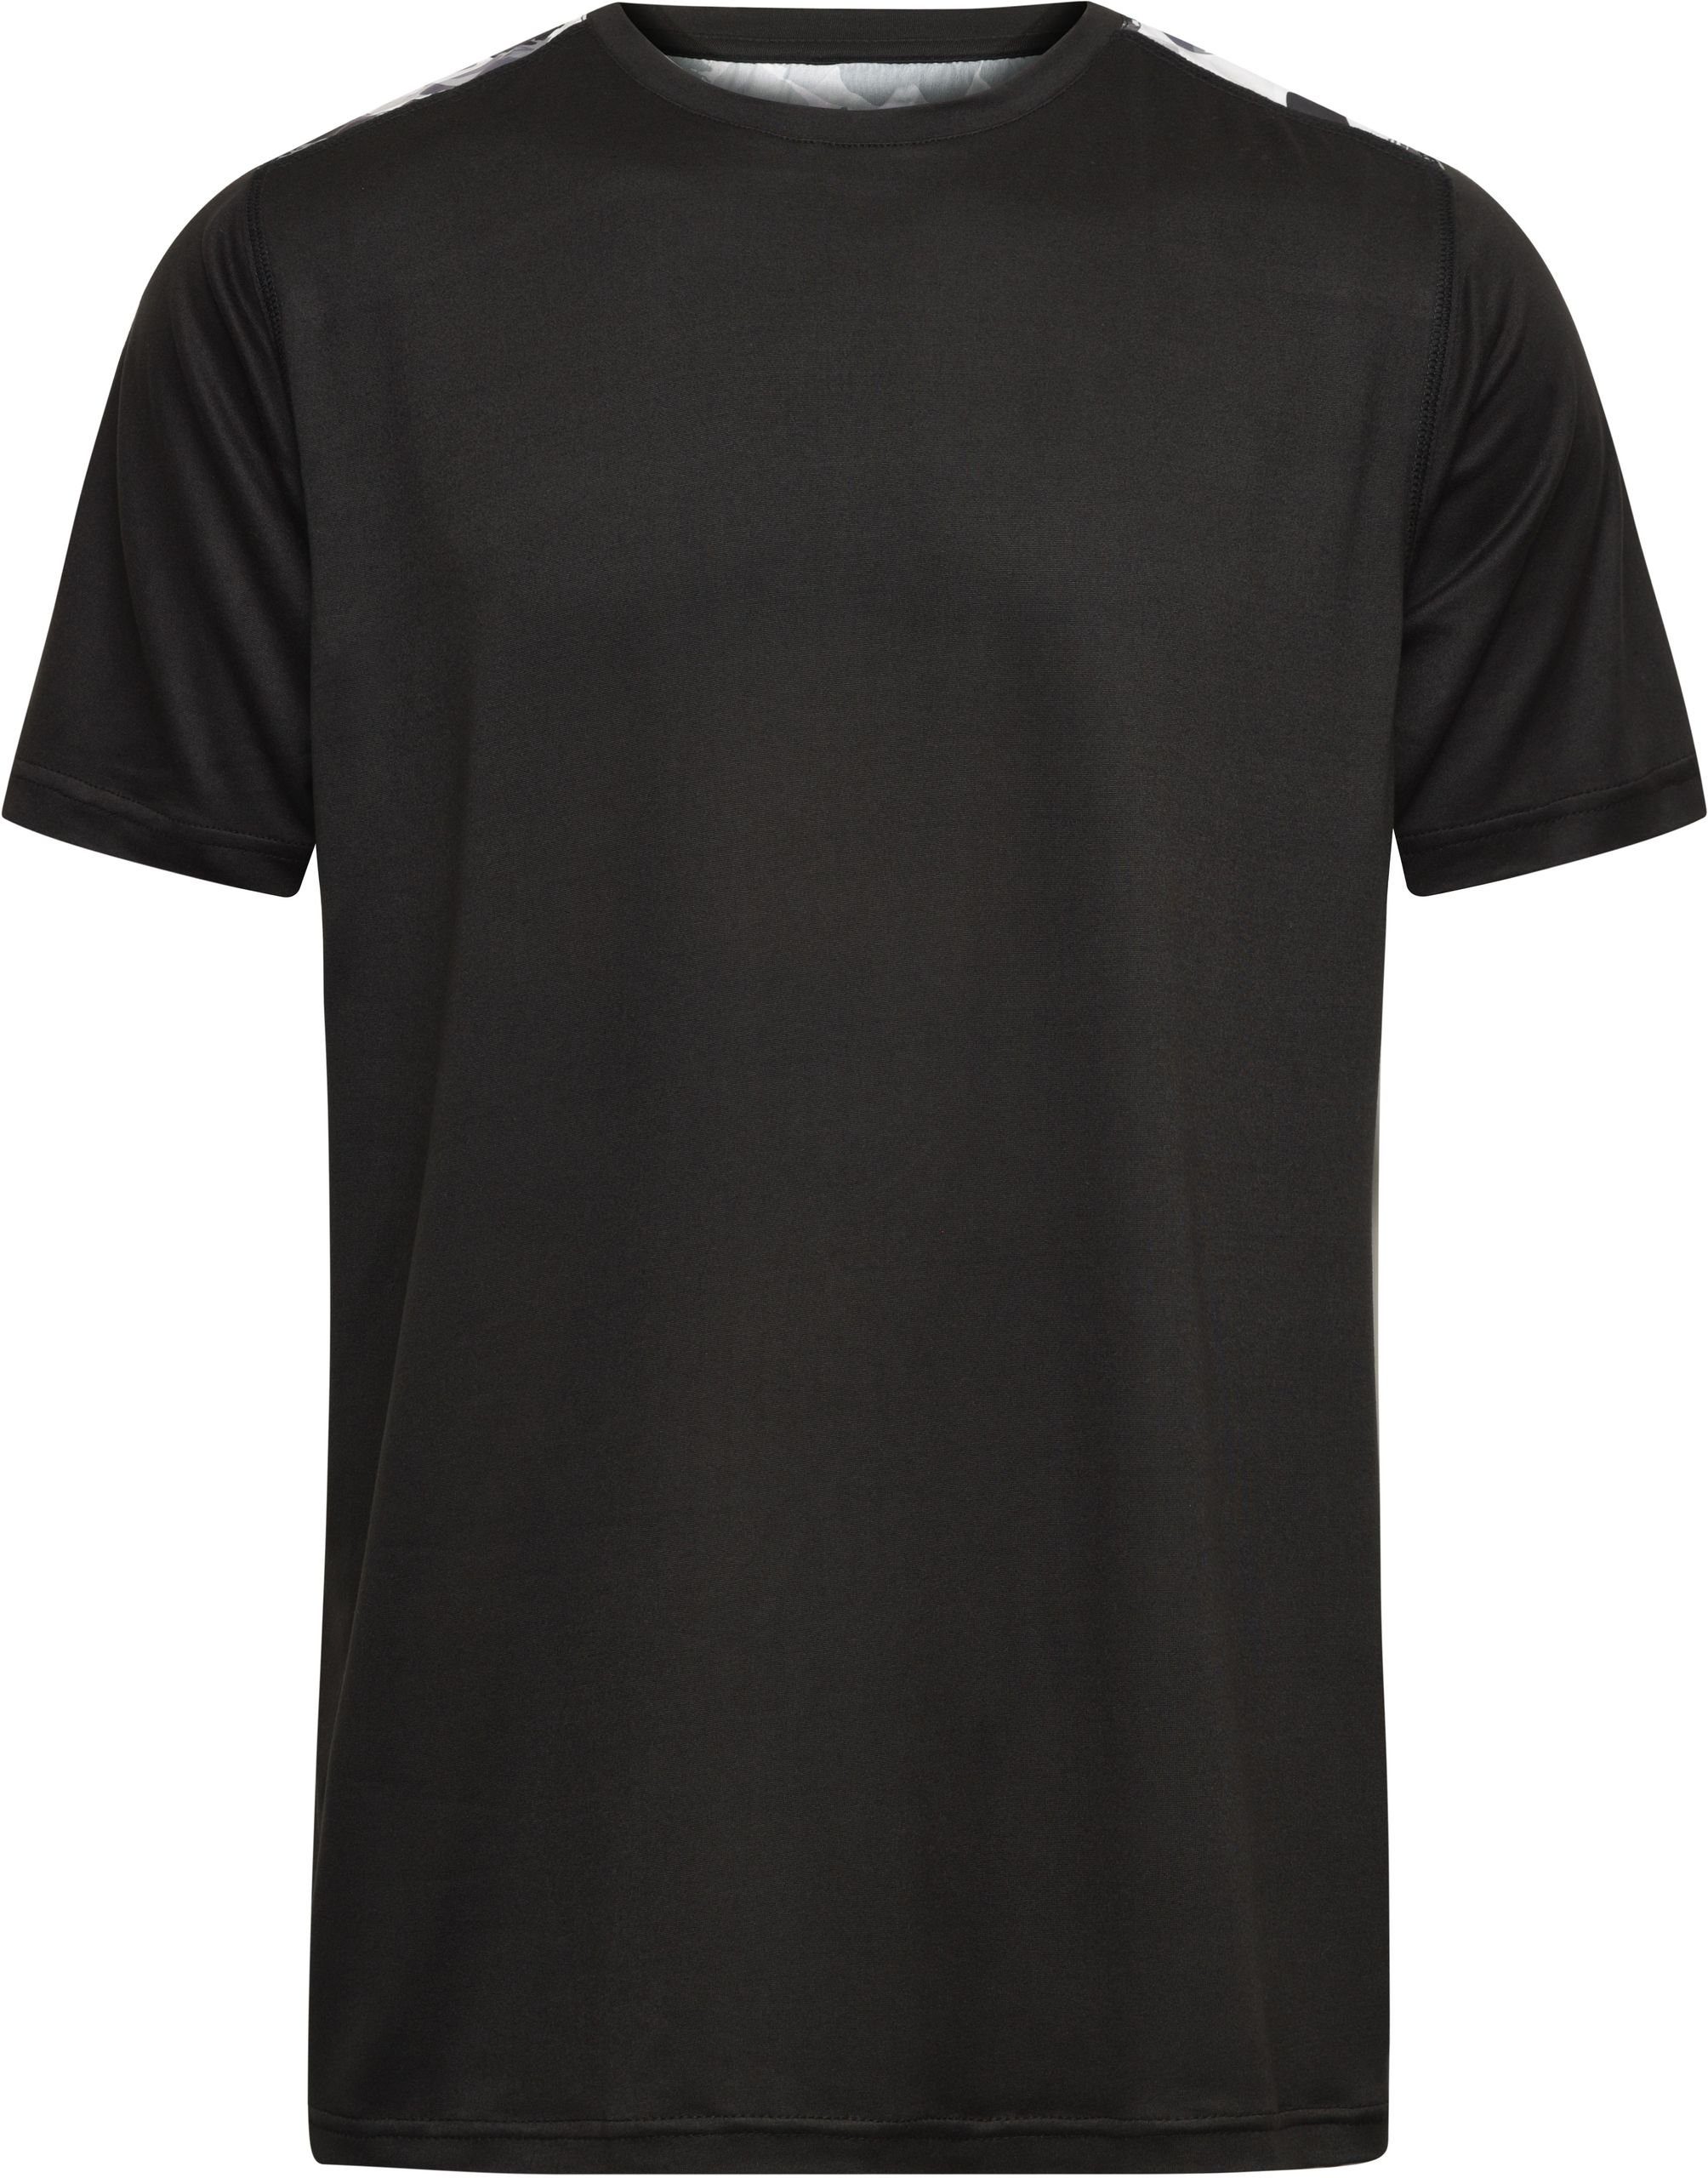 James & Nicholson Trainingsshirt Sport Shirt FaS50524 aus recyceltem Polyester